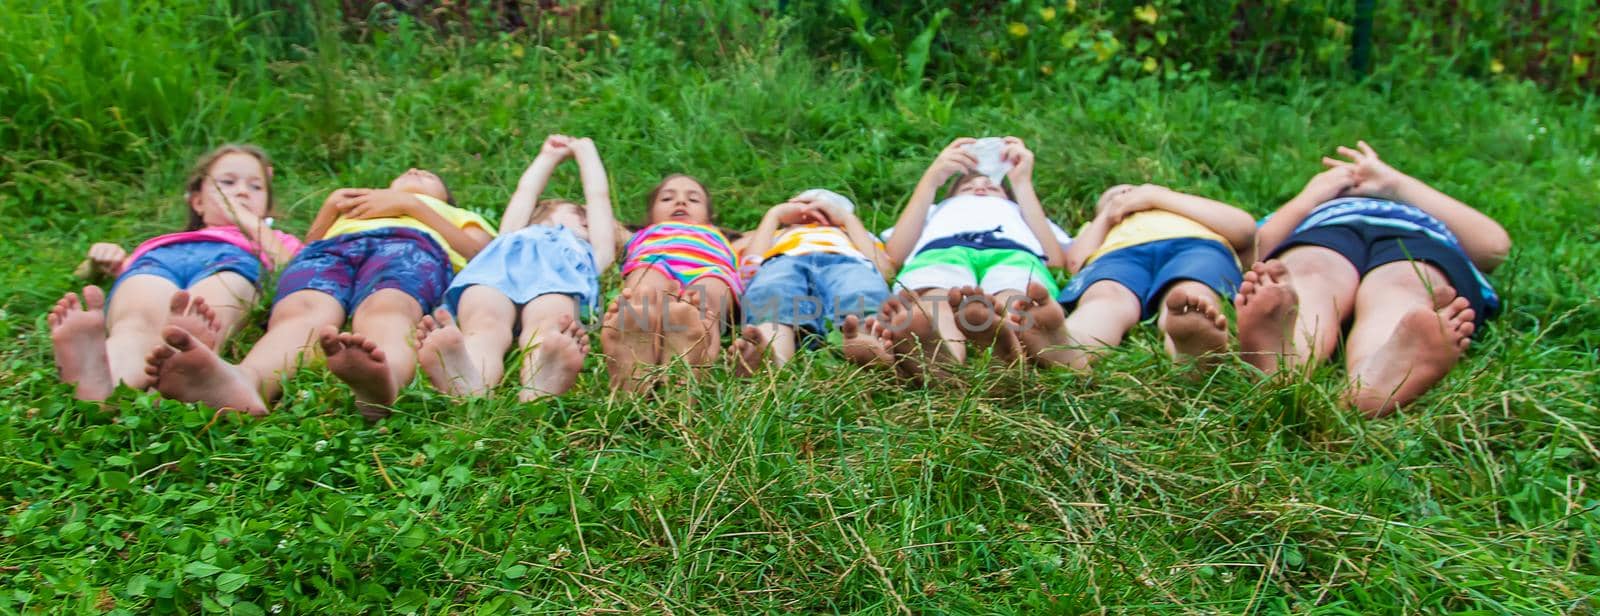 Children's feet lie on the grass. Selective focus. by yanadjana